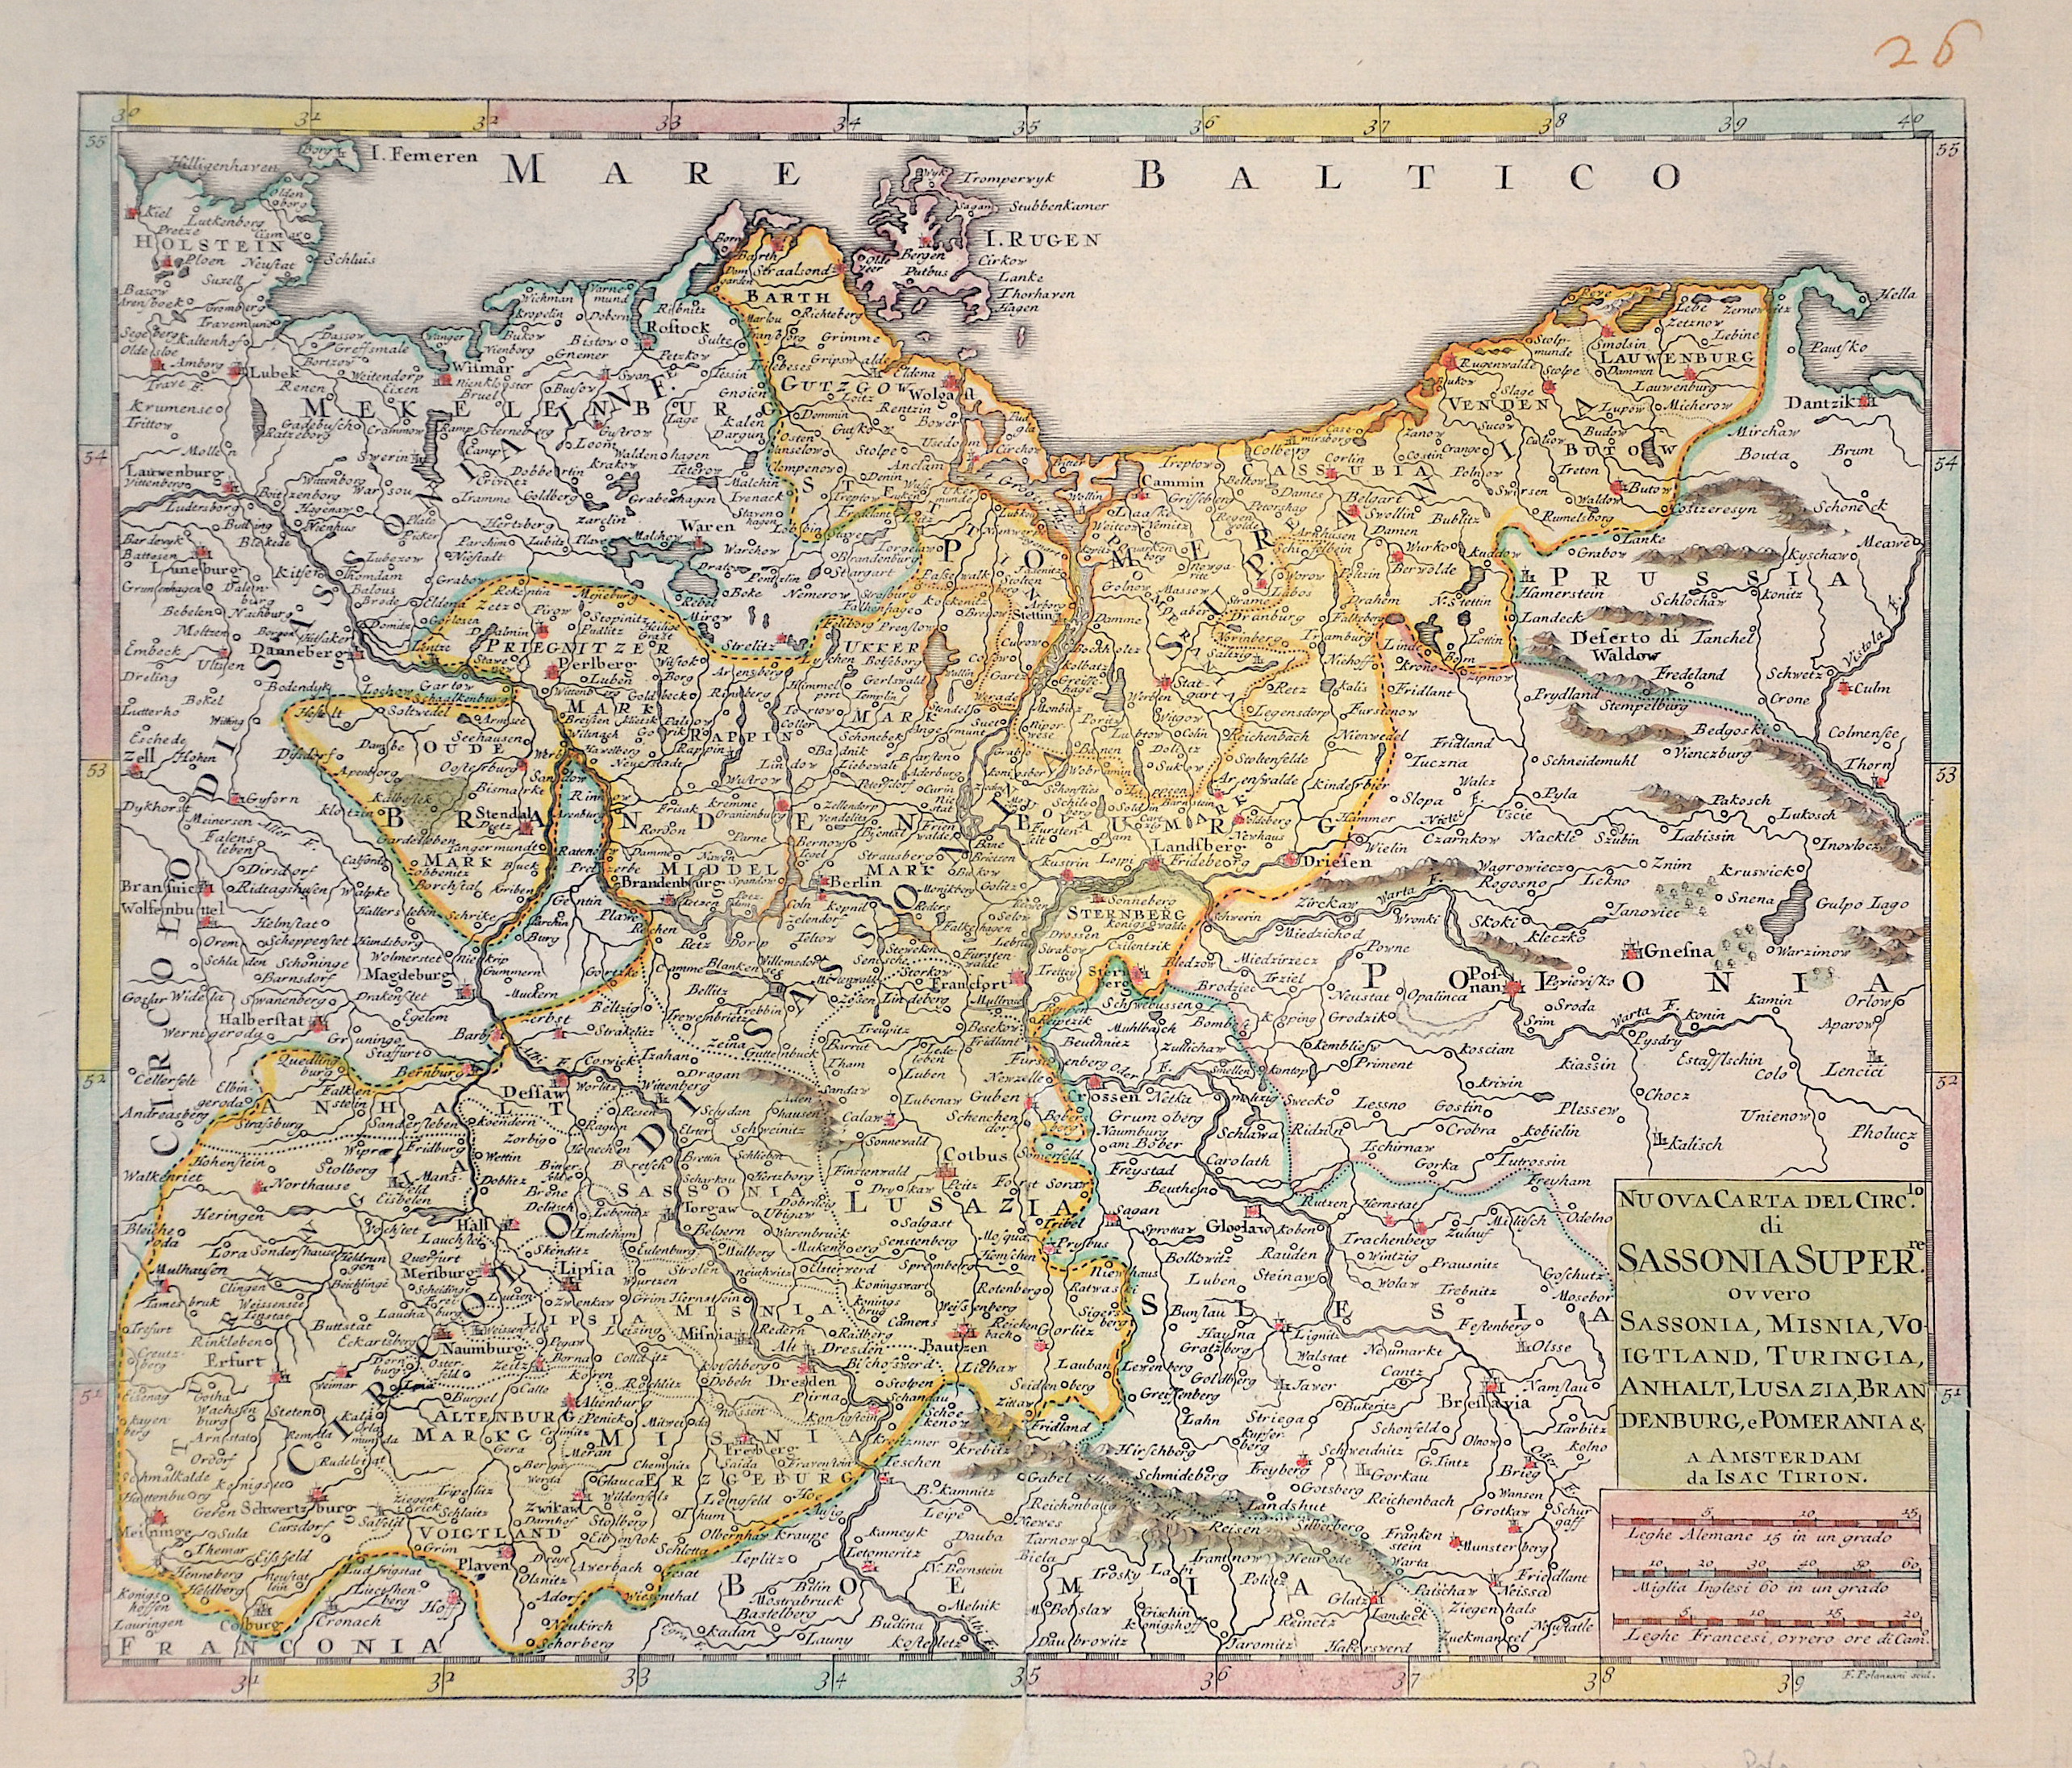 Tirion  Nuova Carta des Circlo di Sassonia Superre ou vero Sassonia, Misnia, Voigtland, Turingia, Anhalt, Lusazia, Brandenburg, e Pomeraniae u.